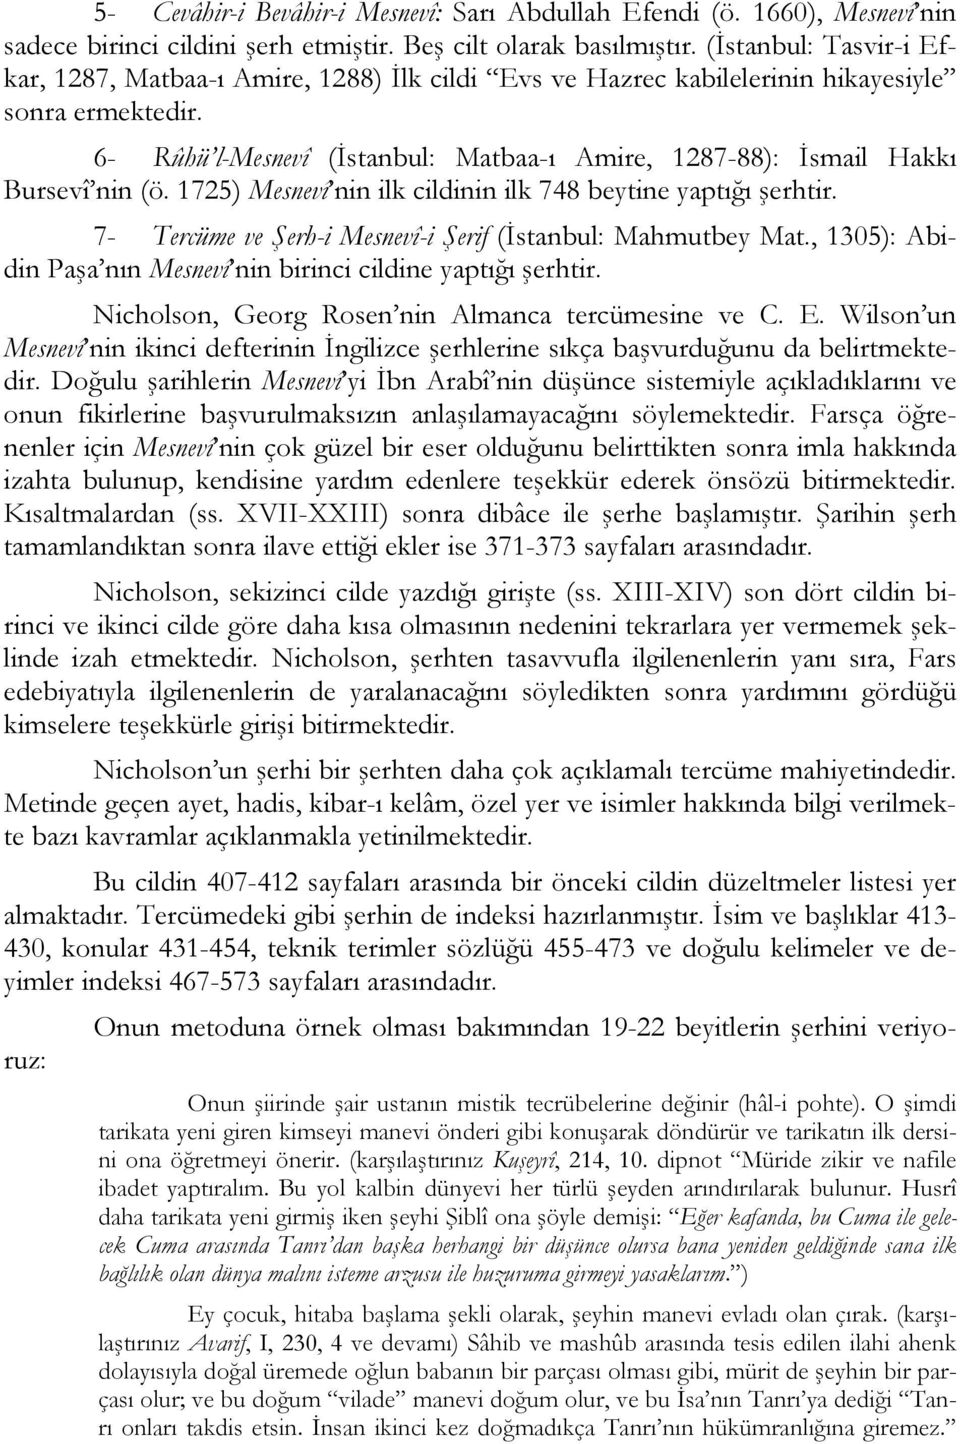 6- Rûhü l-mesnevî (İstanbul: Matbaa-ı Amire, 1287-88): İsmail Hakkı Bursevî nin (ö. 1725) Mesnevî nin ilk cildinin ilk 748 beytine yaptığı şerhtir.